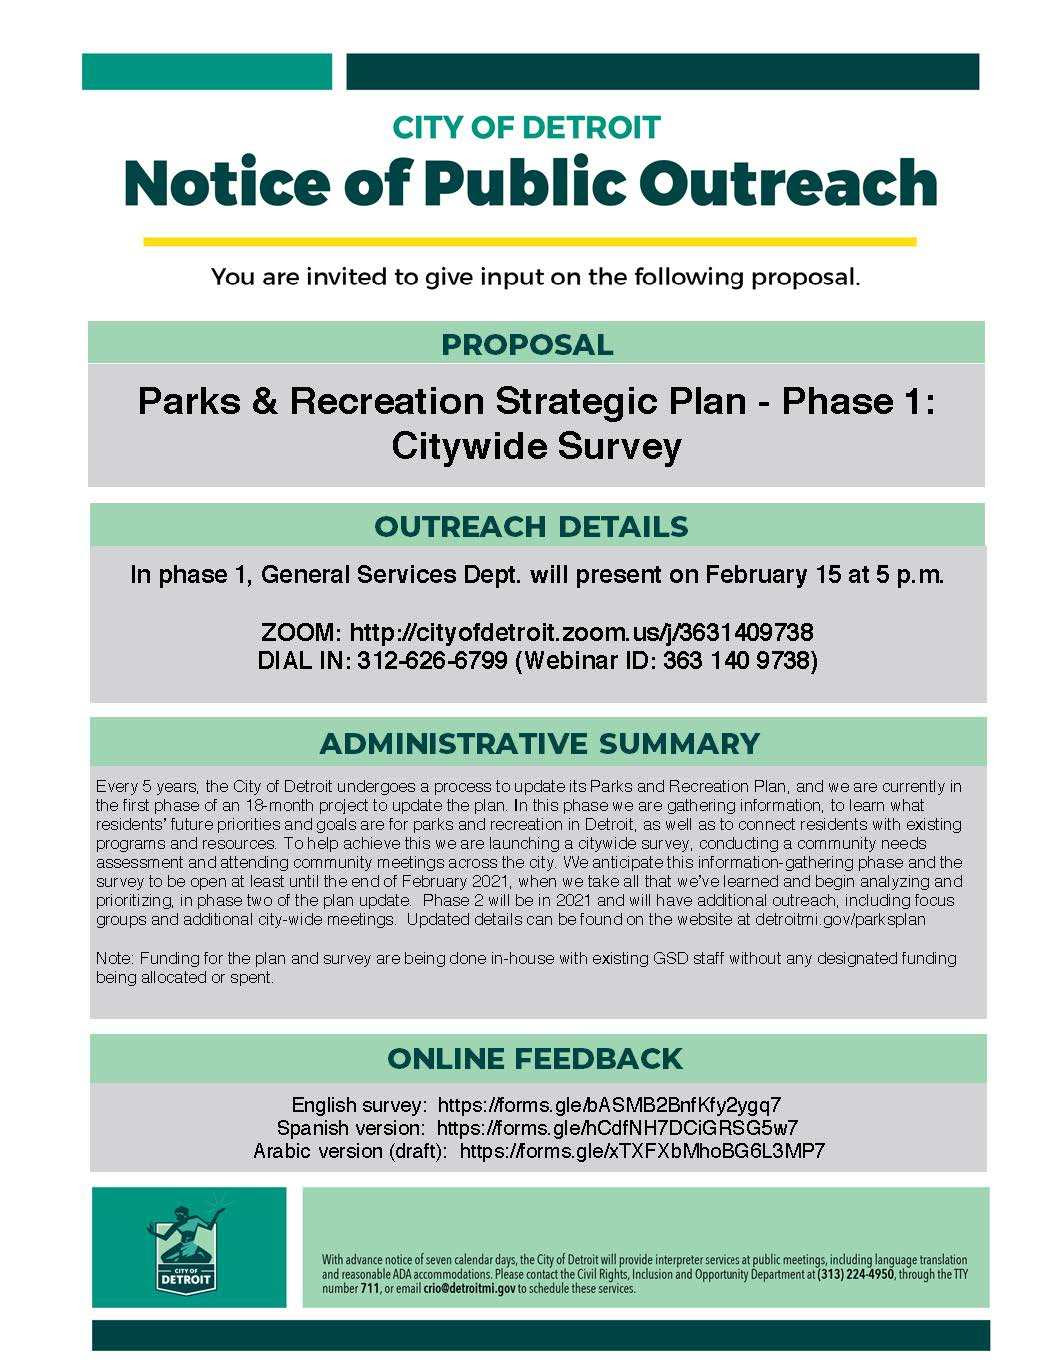 Parks & Recreation Strategic Plan Phase 1